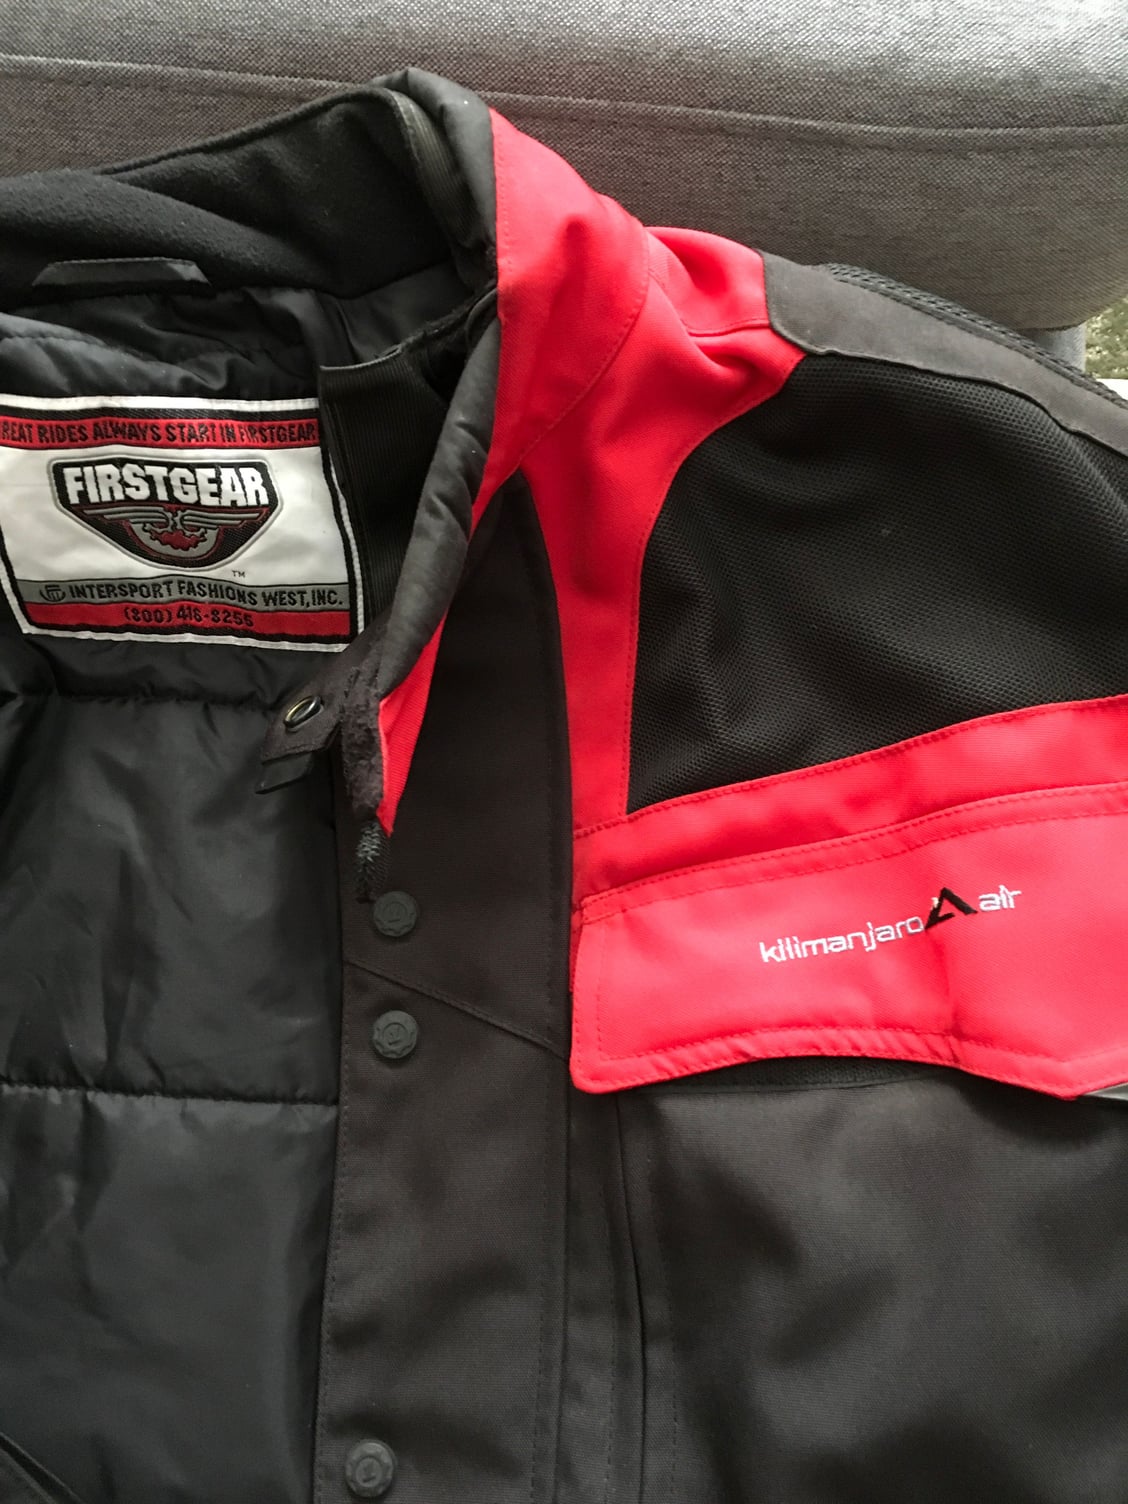 First Gear textile Kilimanjaro Air jacket XL - Harley Davidson Forums